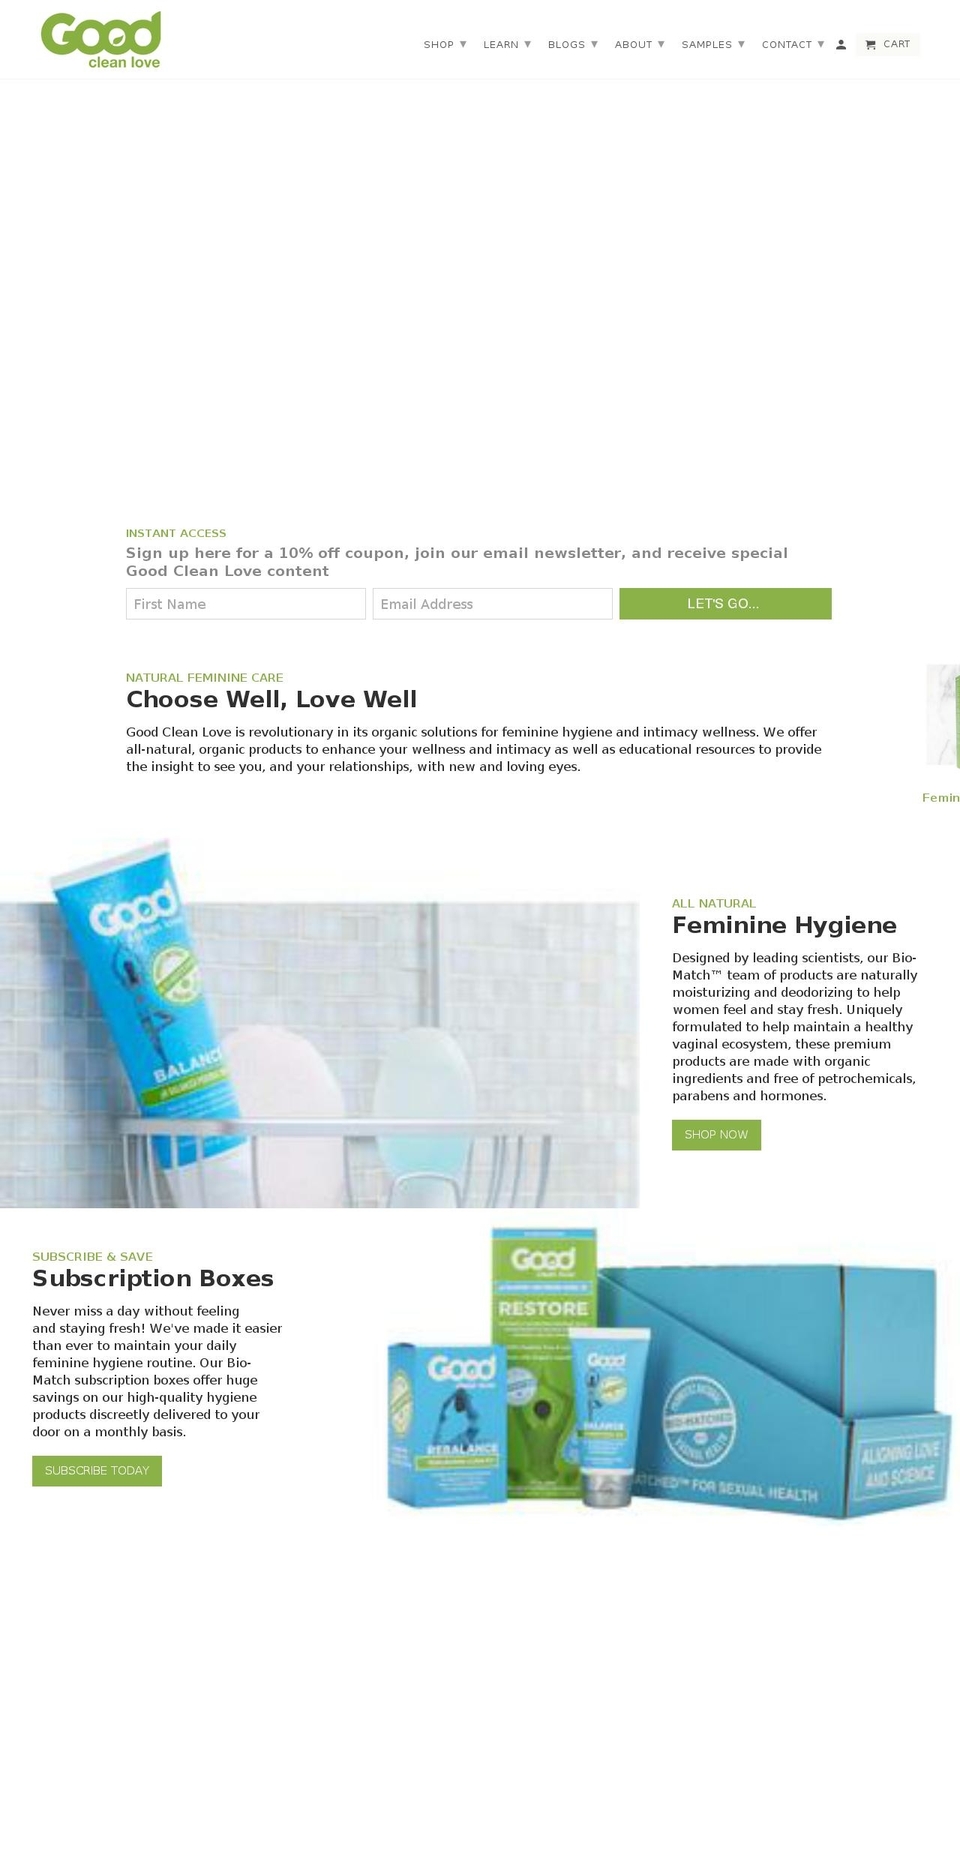 makelove.organic shopify website screenshot